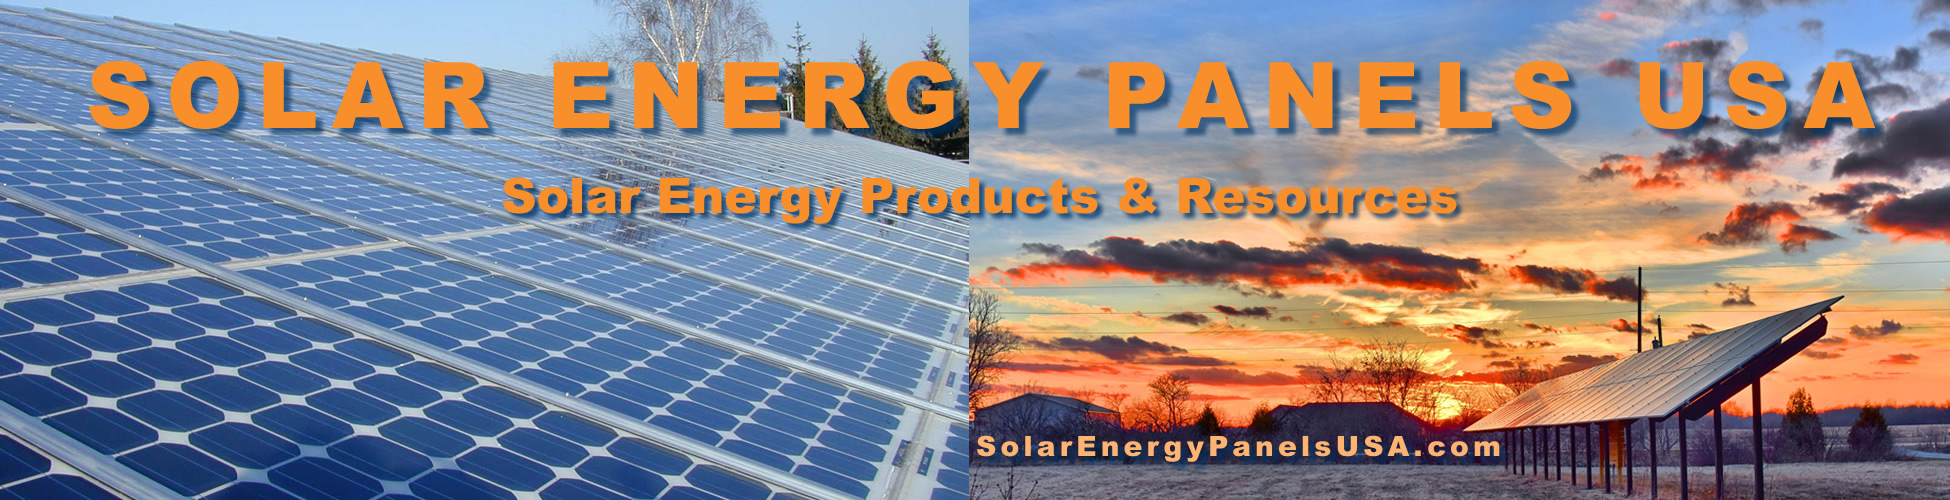 Solar Energy Panels USA